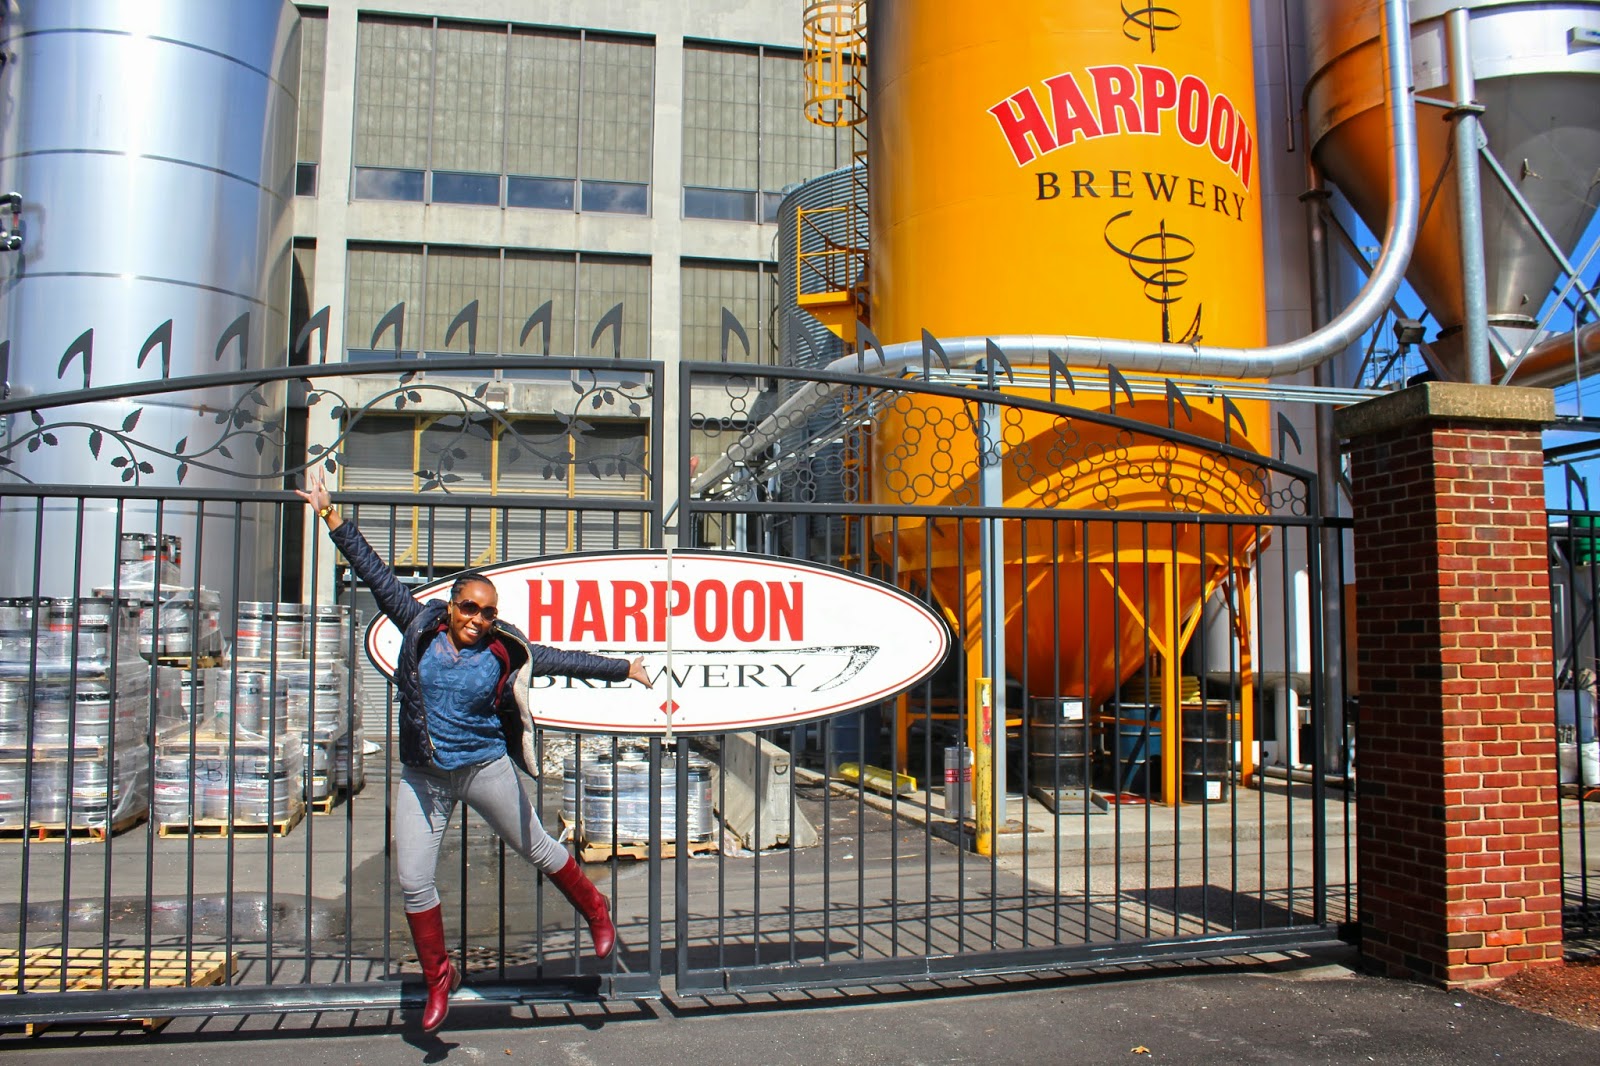 harpoon brewery tour tickets